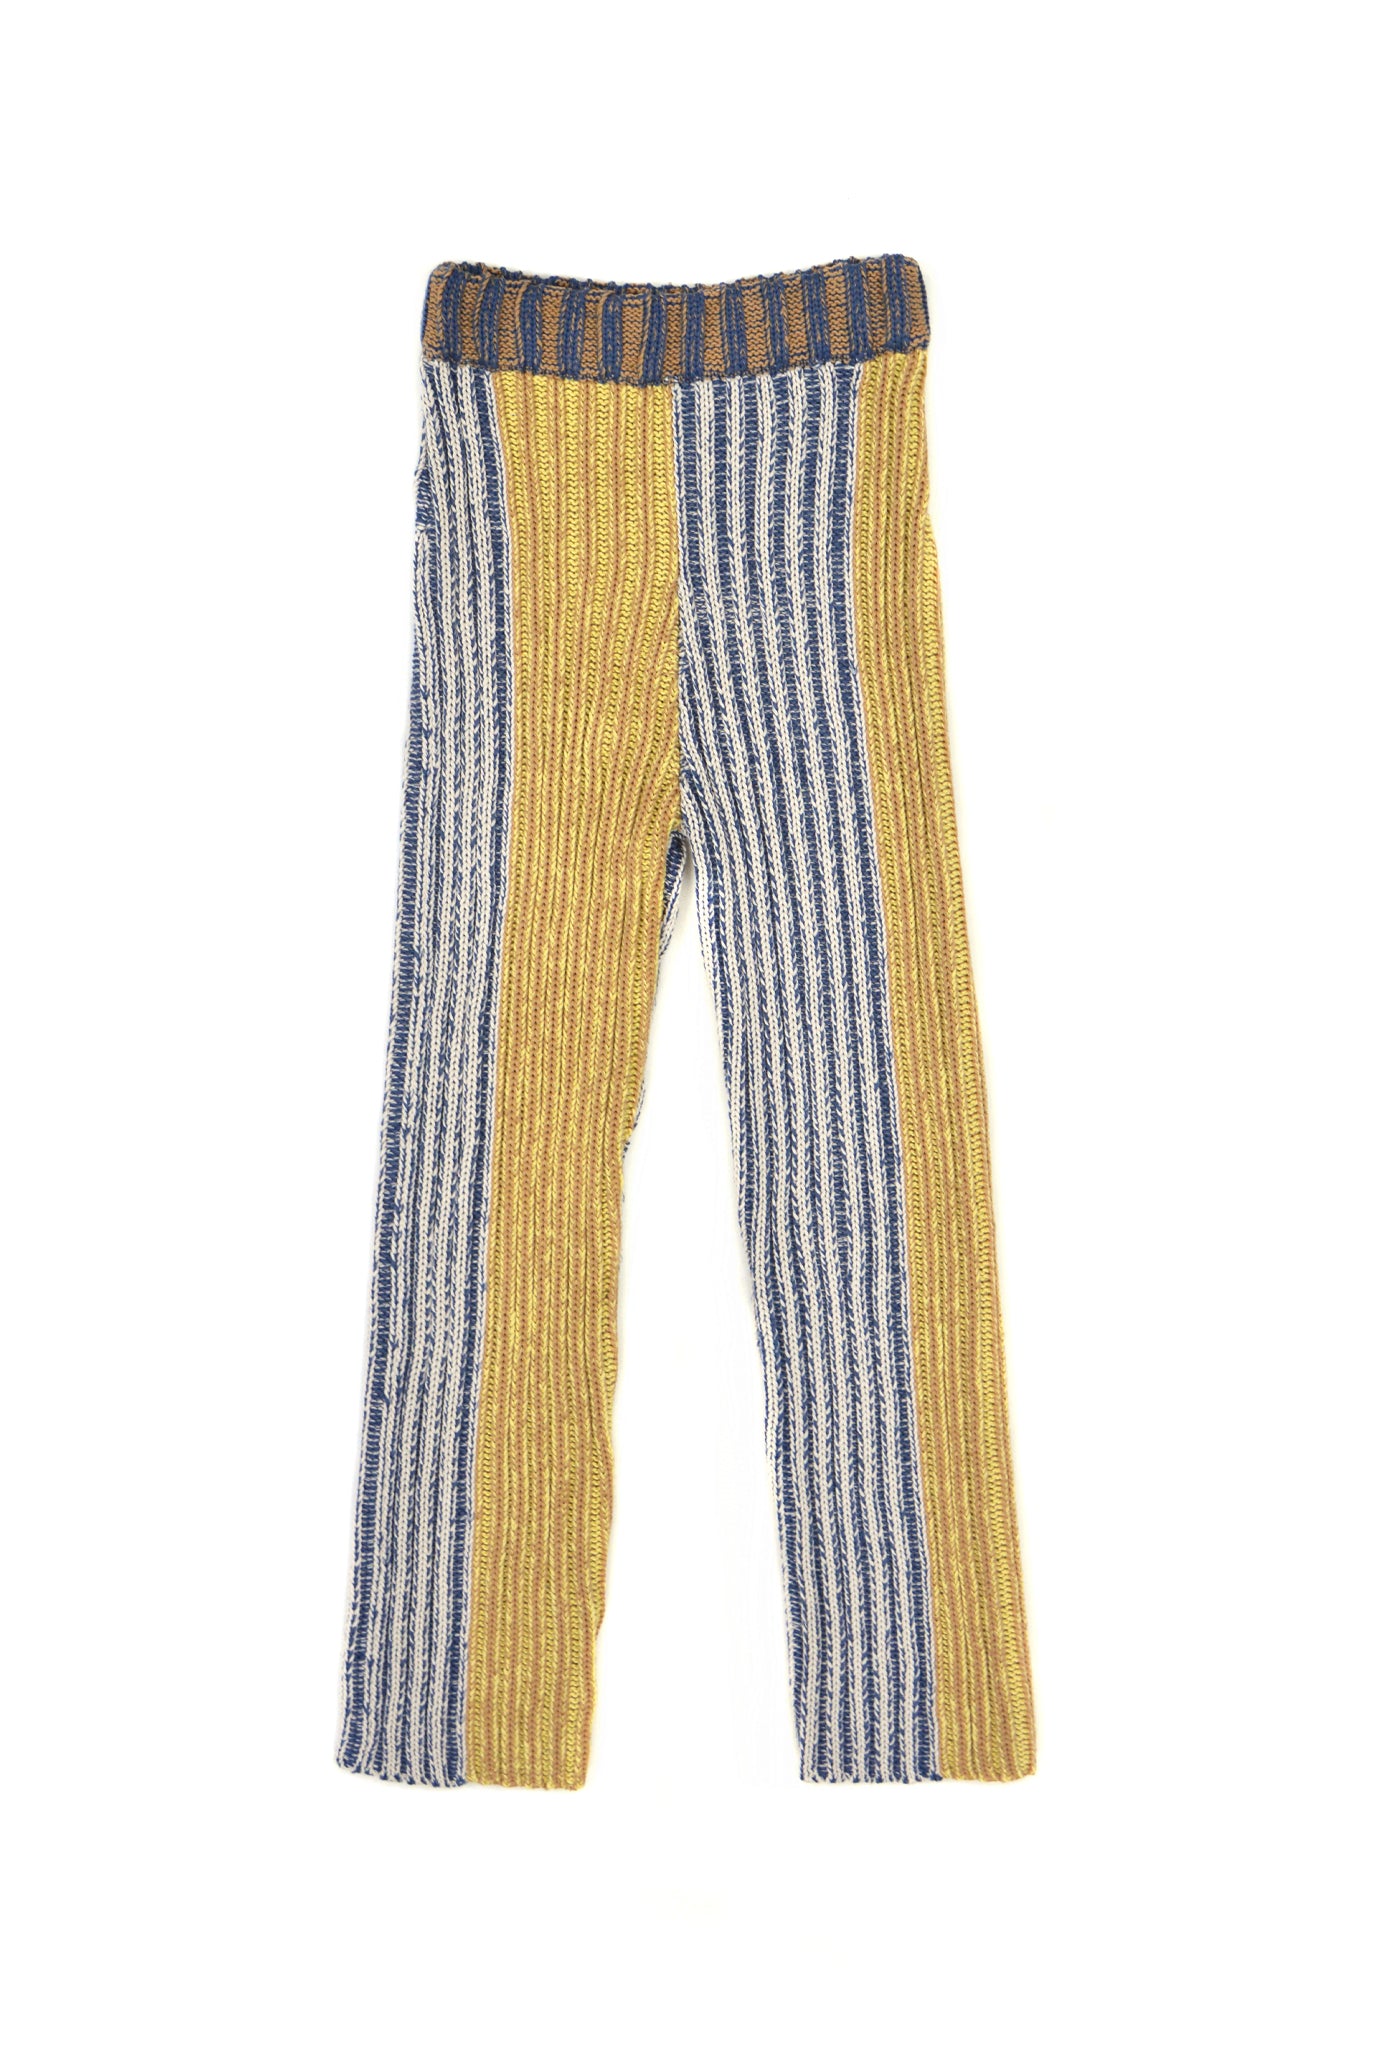 Eckhaus Latta Two-Tone Knit Pant